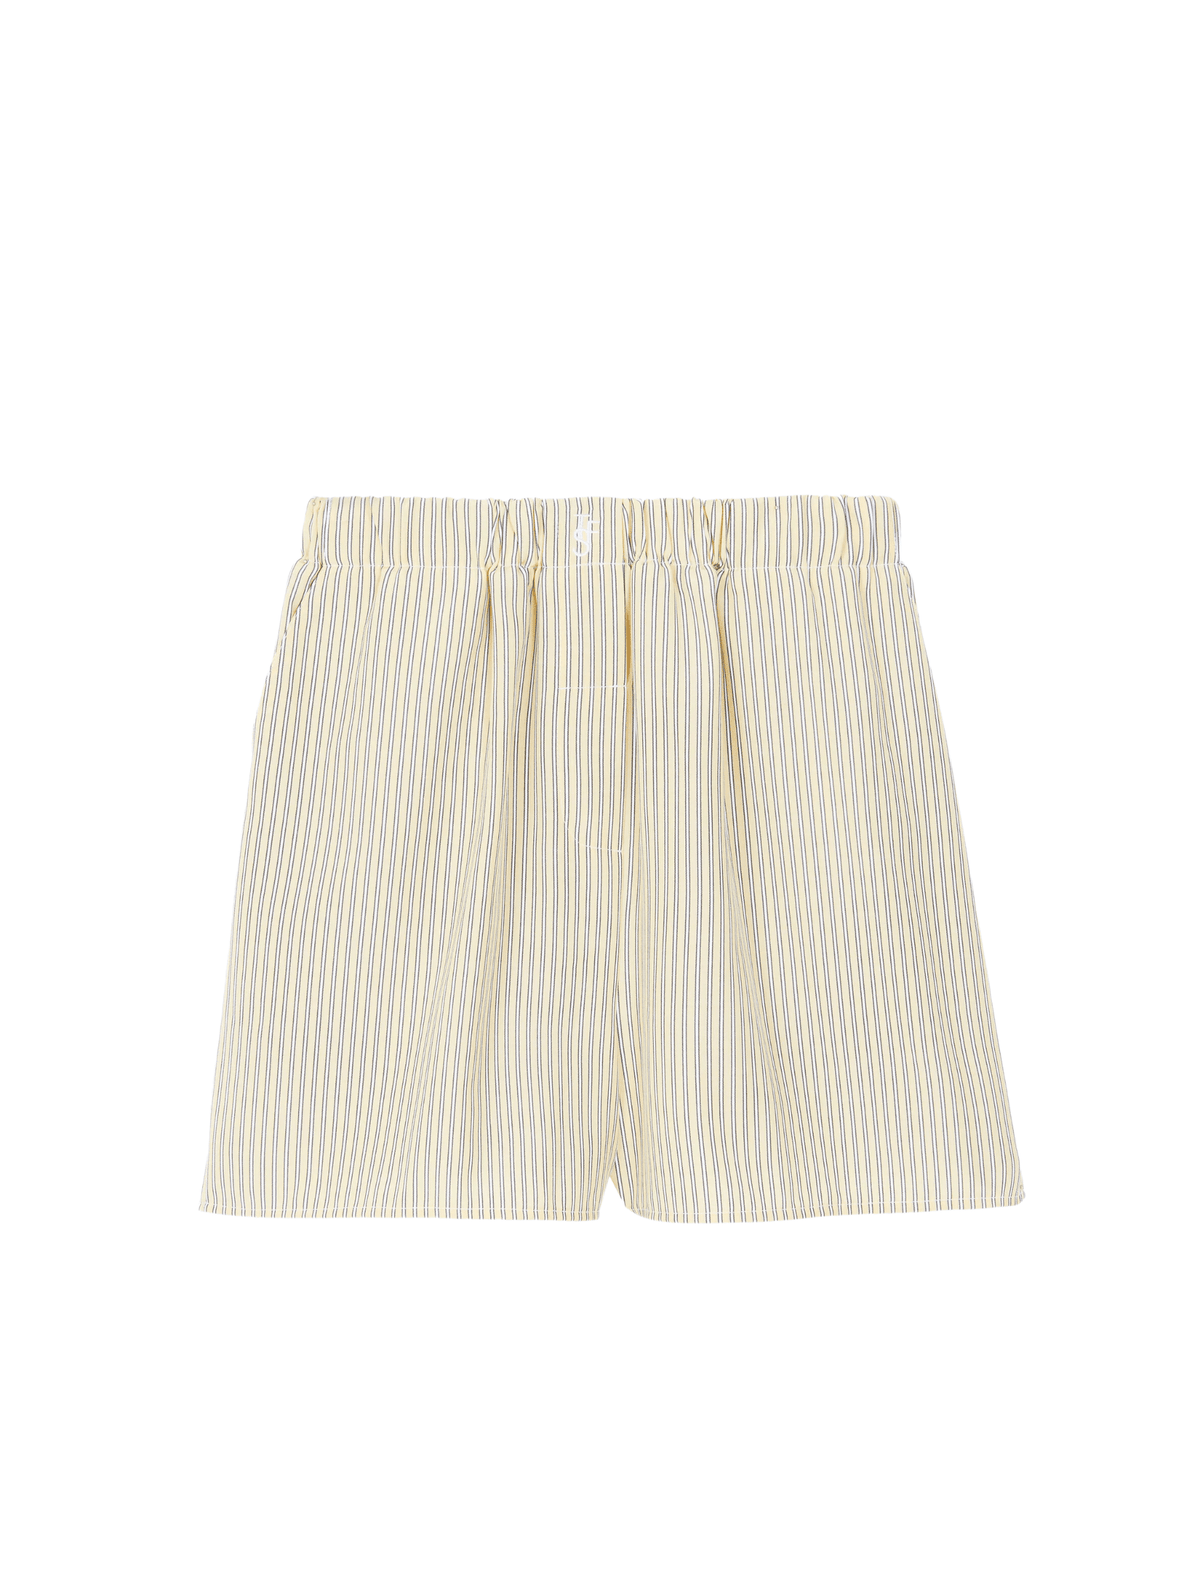 Lui Oxford Shorts / Pale Yellow &amp; Black Stripe Womens Frankie Shop 